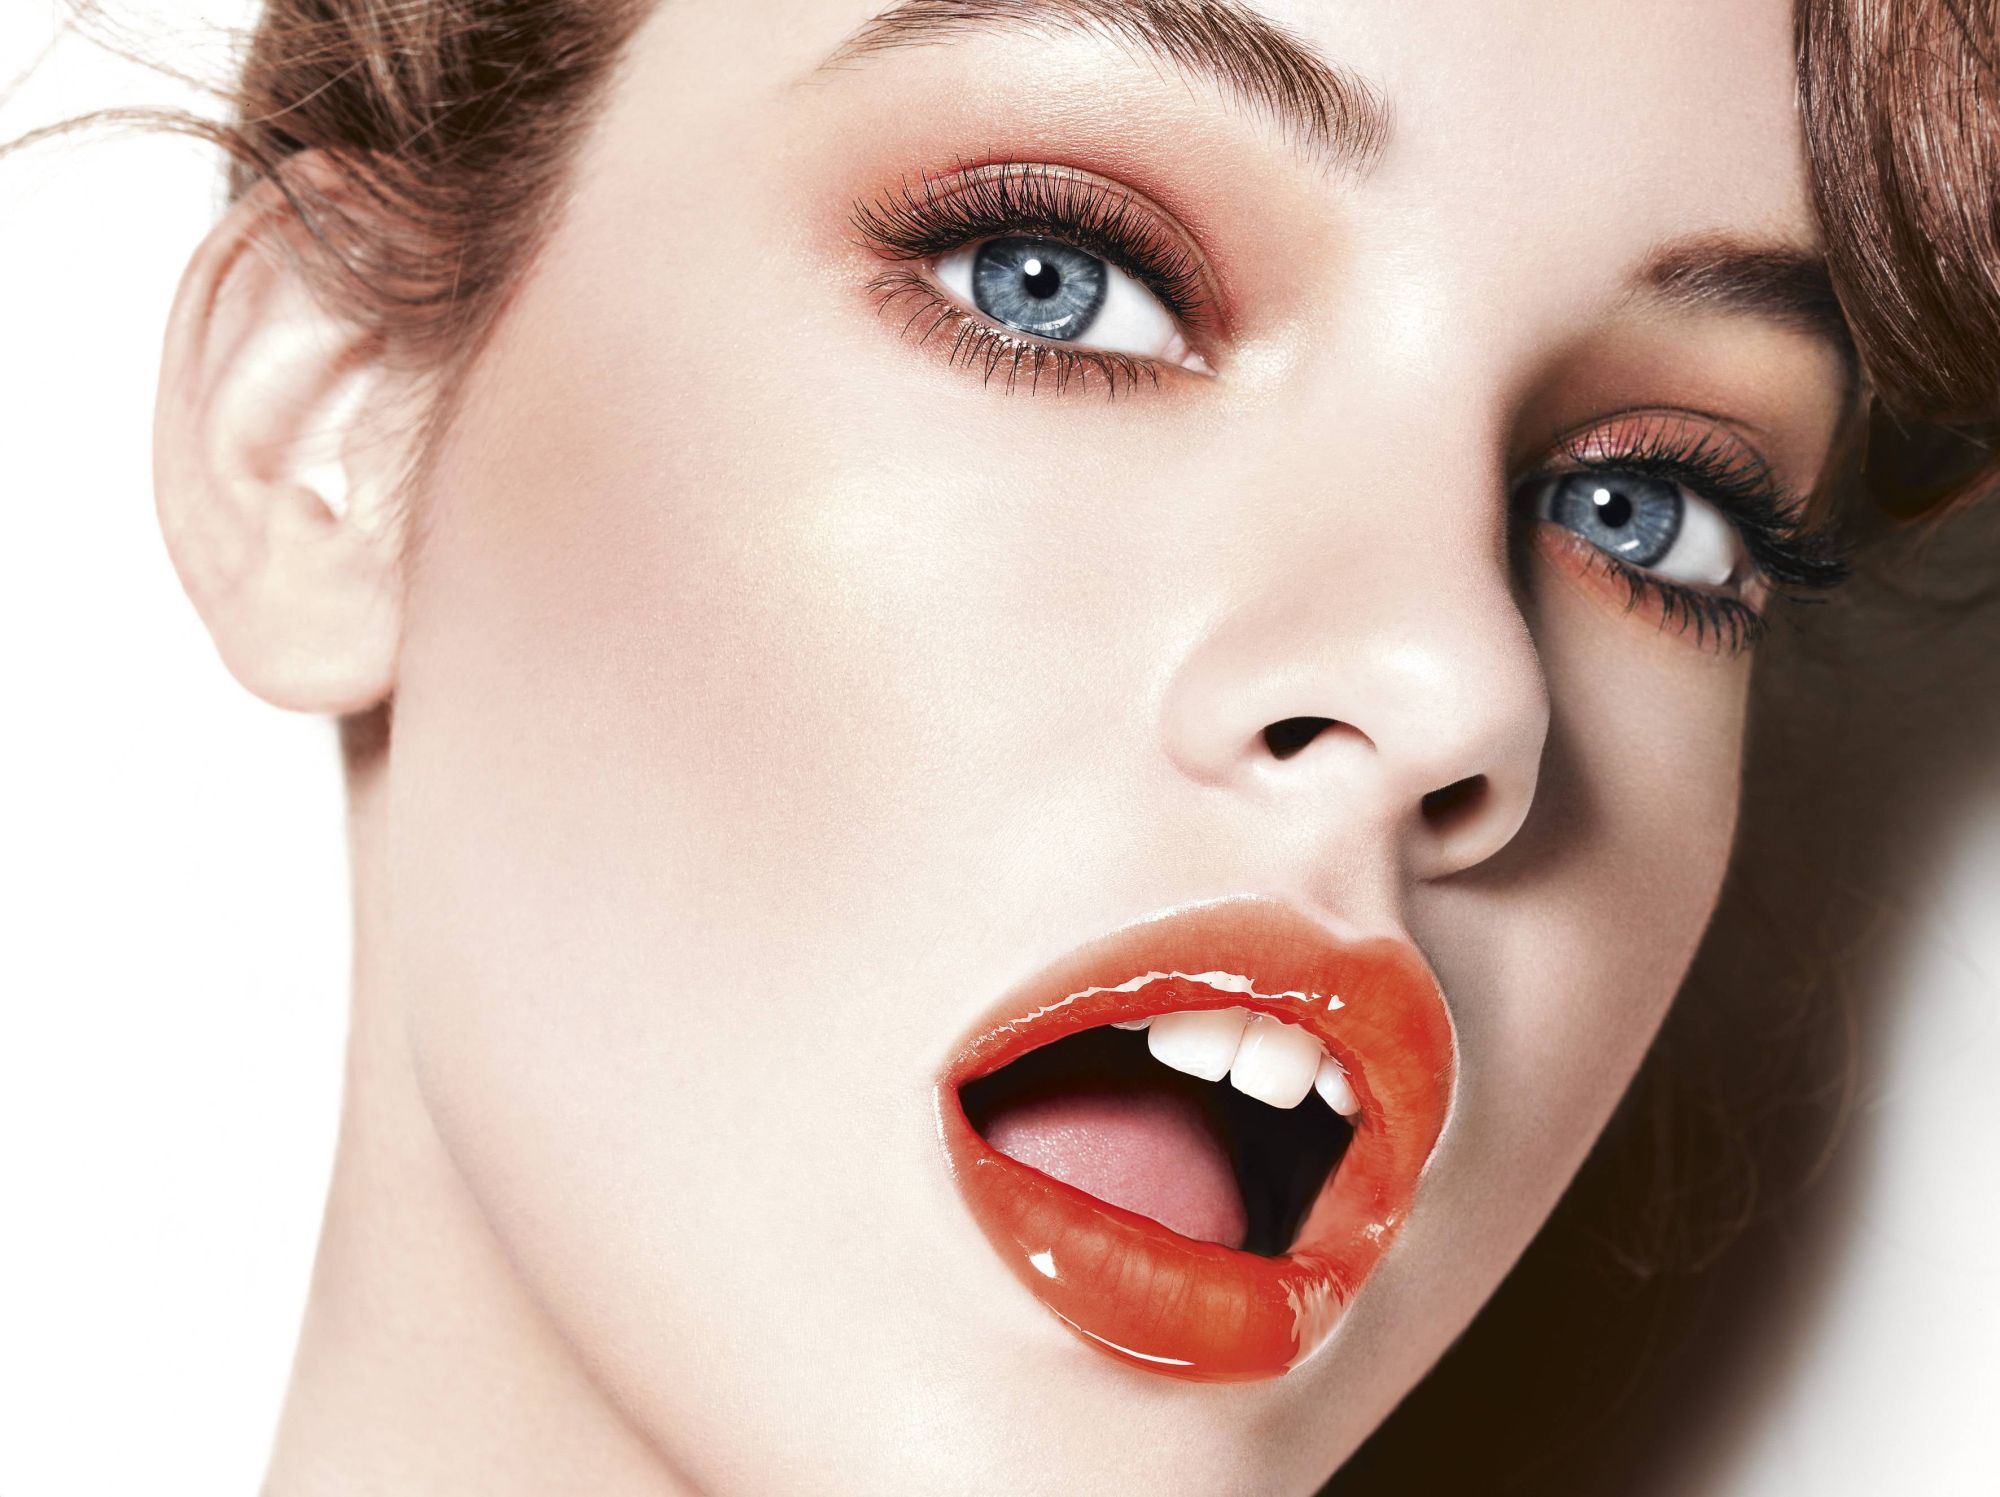 barbara-palvin-model-open-mouth-makeup-wallpaper.jpg